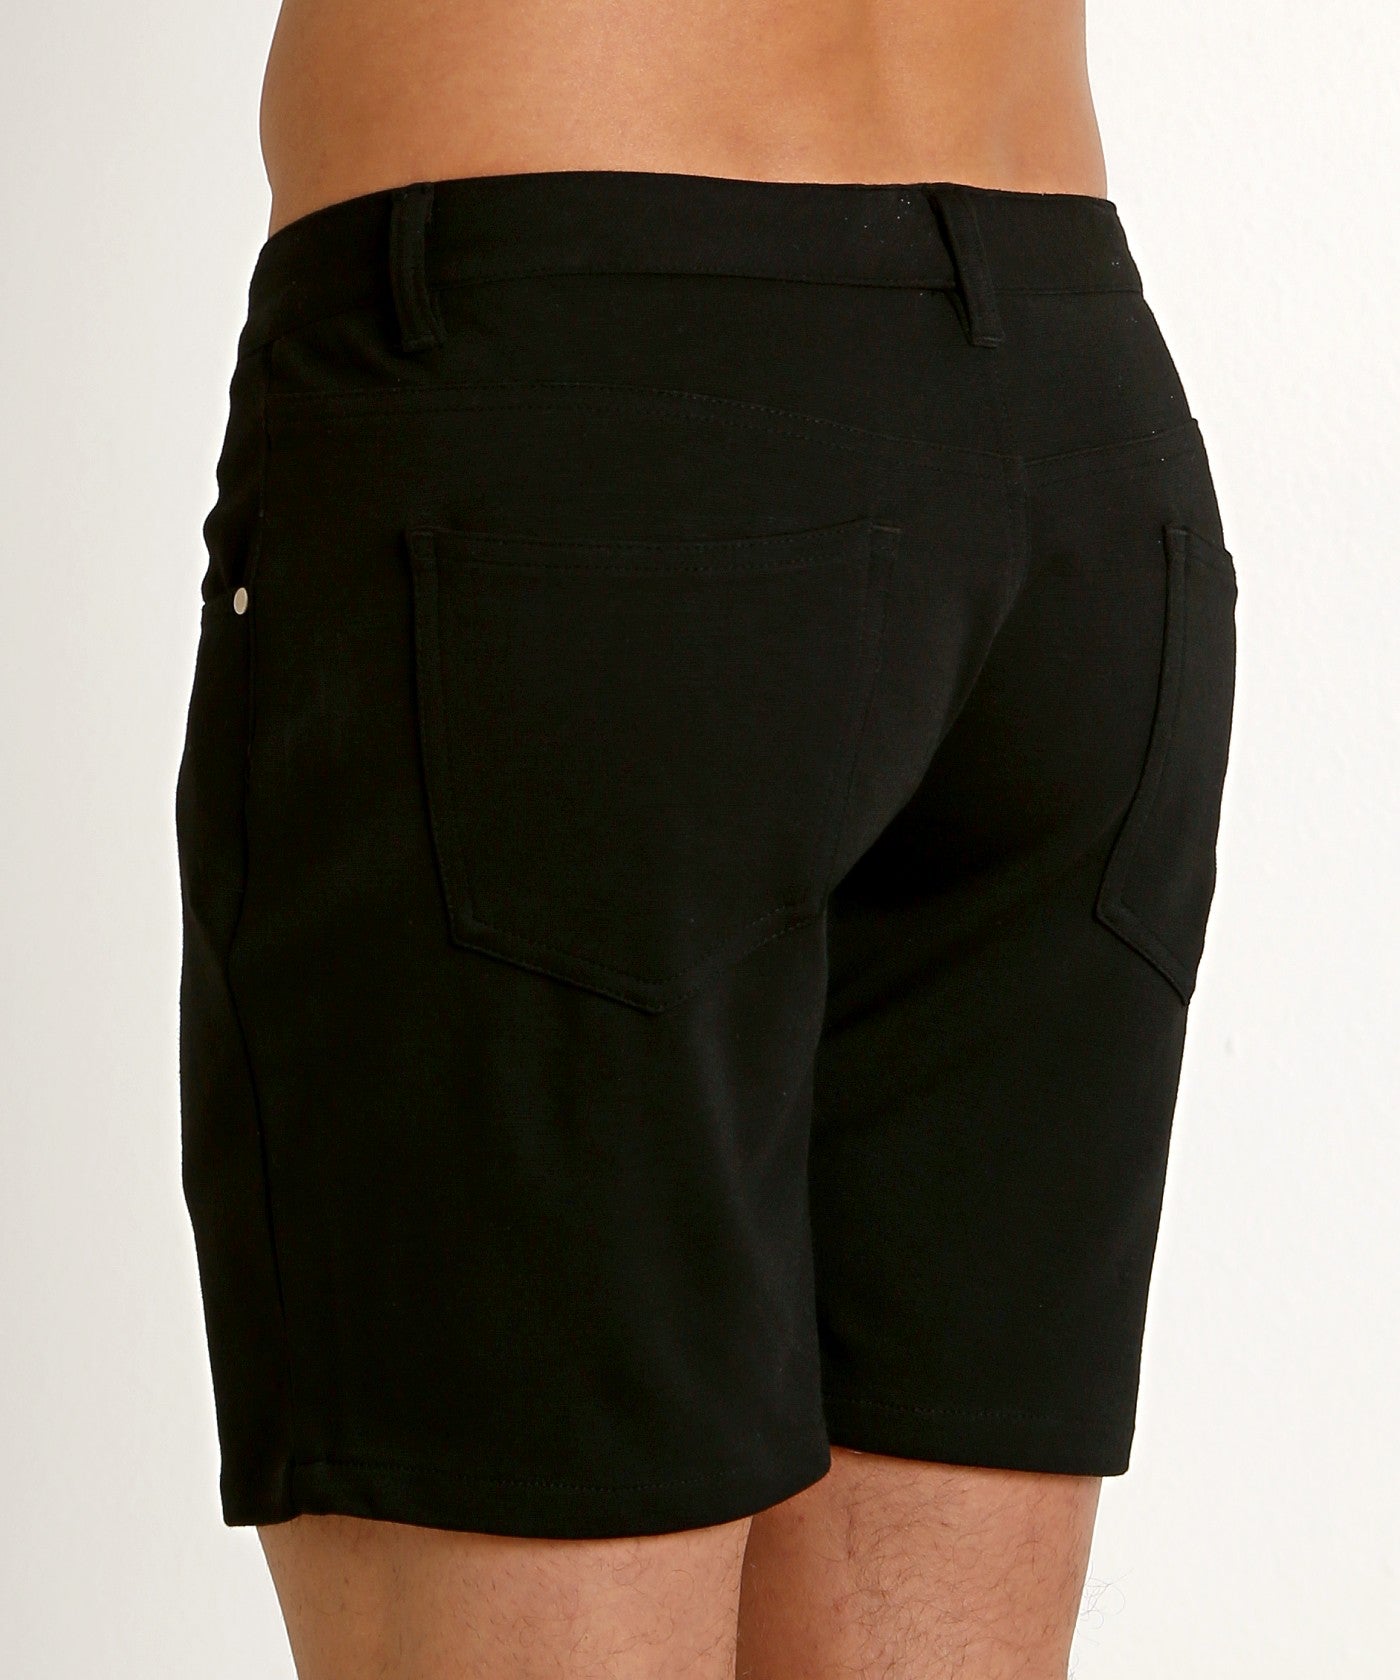 St33le 5" Knit Jean Shorts (Black)